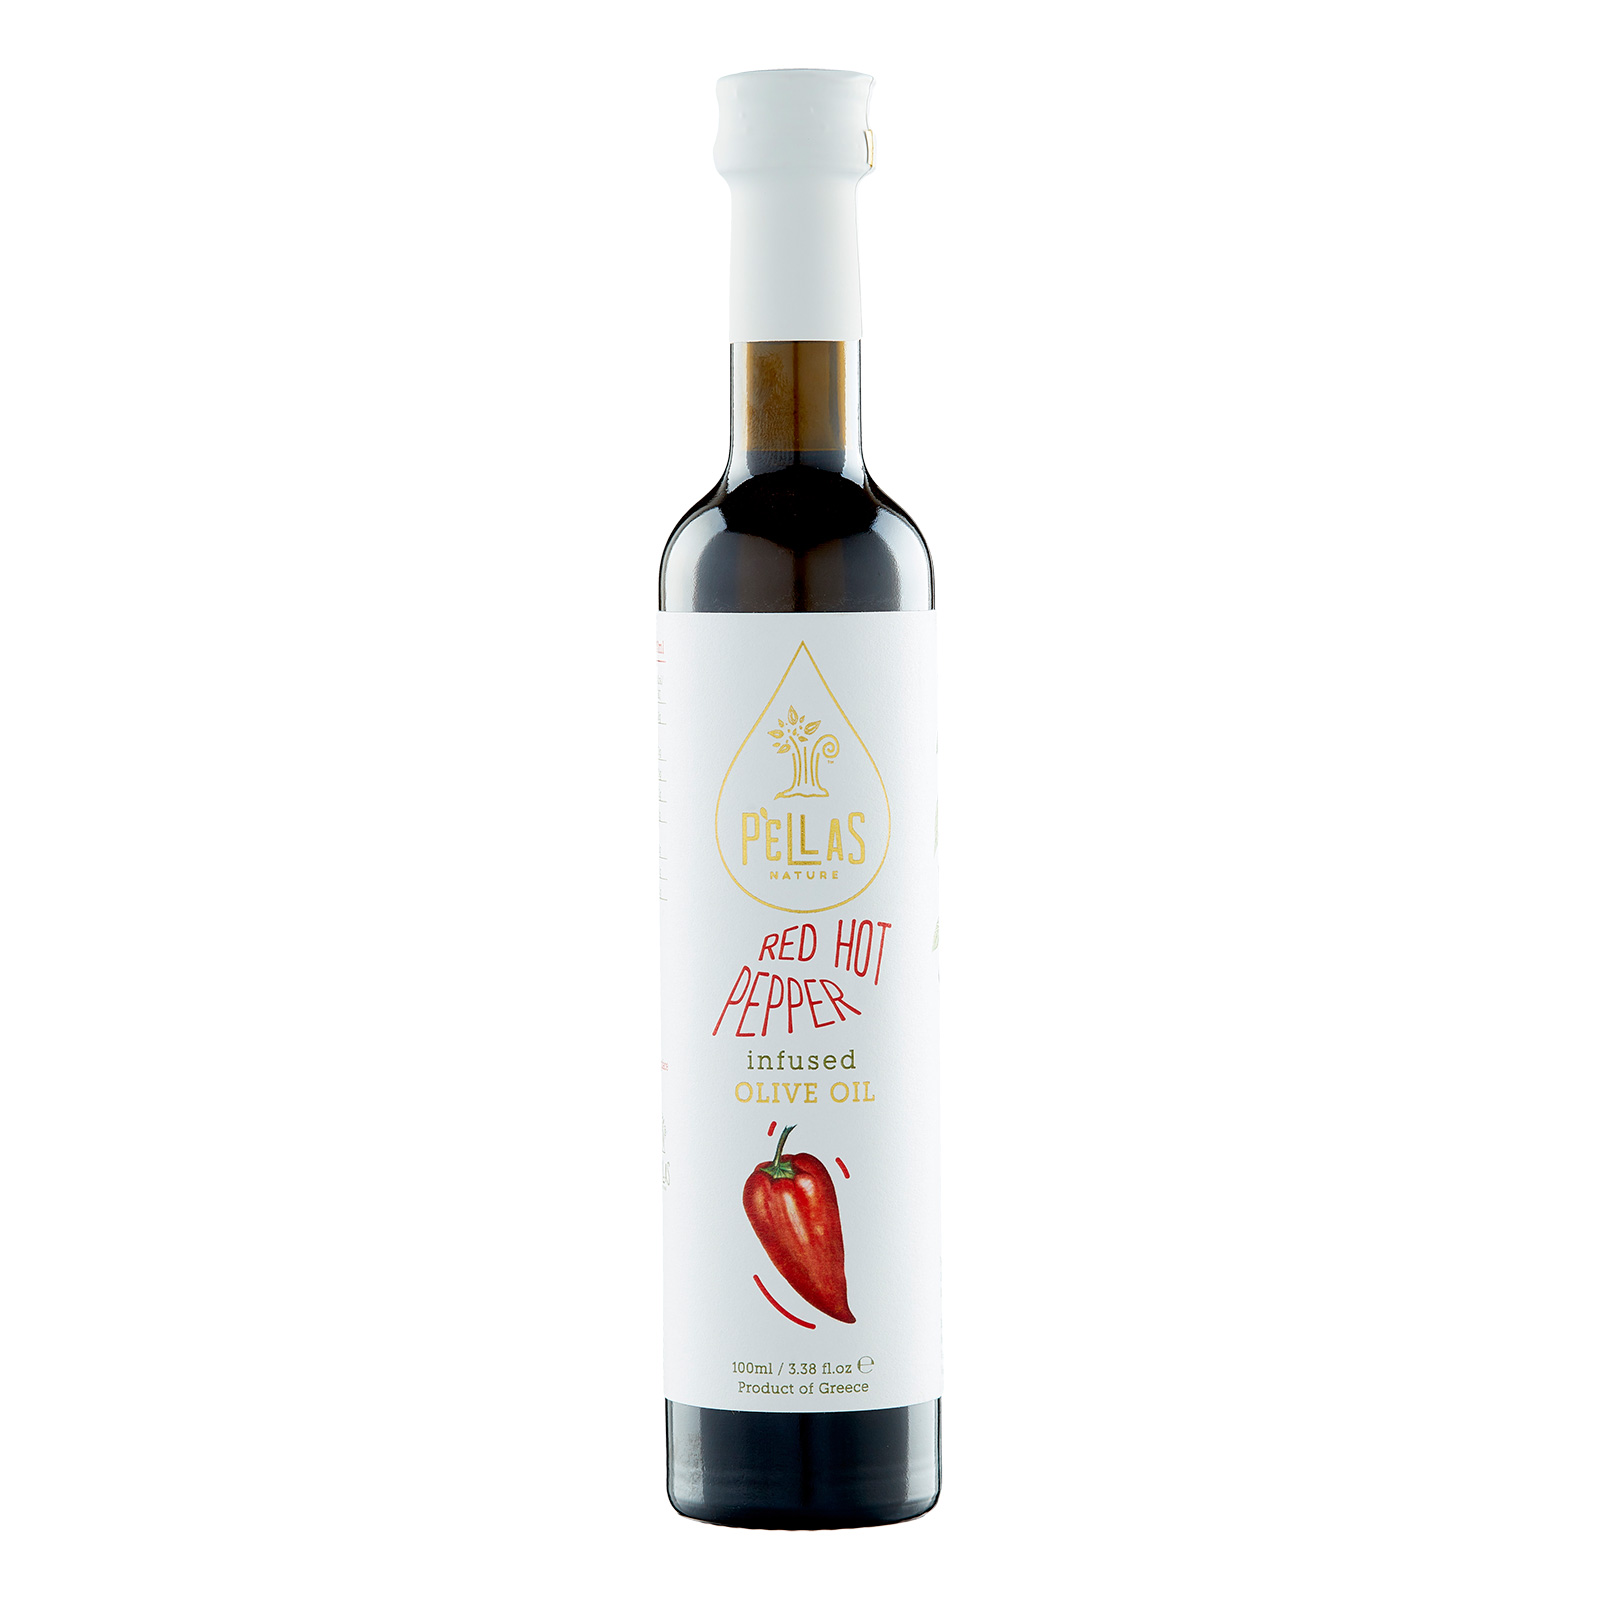 Pellas Nature Red Hot Pepper infused Extra Virgin Olive Oil 3.38 fl.oz Bottle